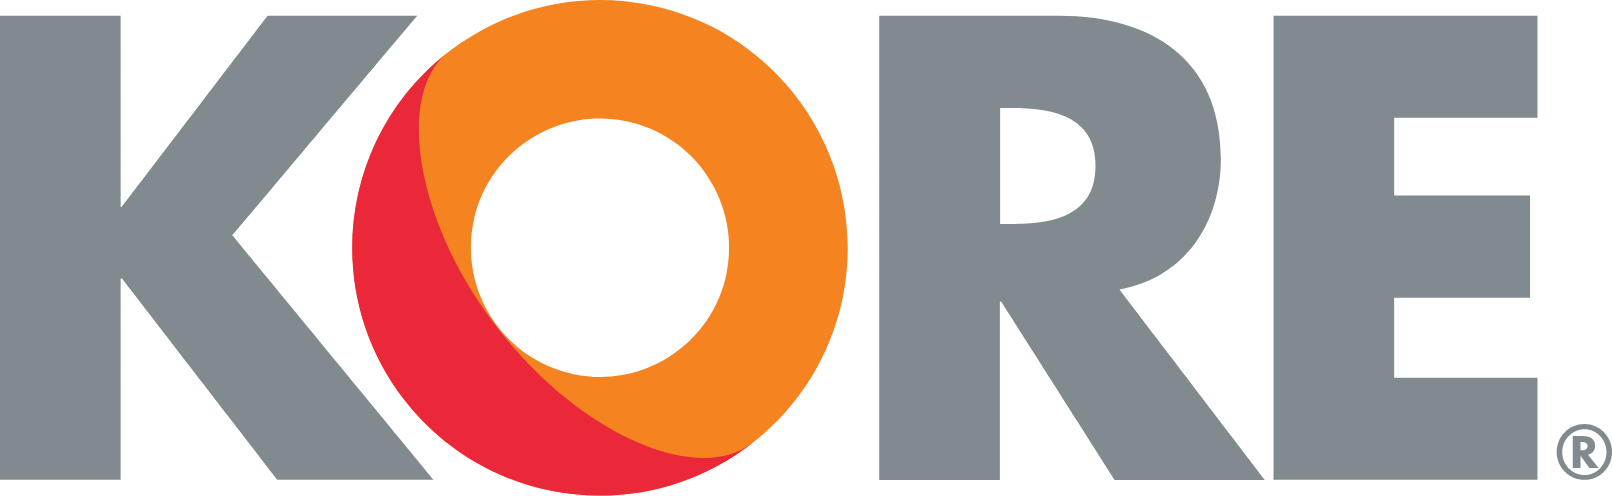 KORE logo large (transparent PNG)